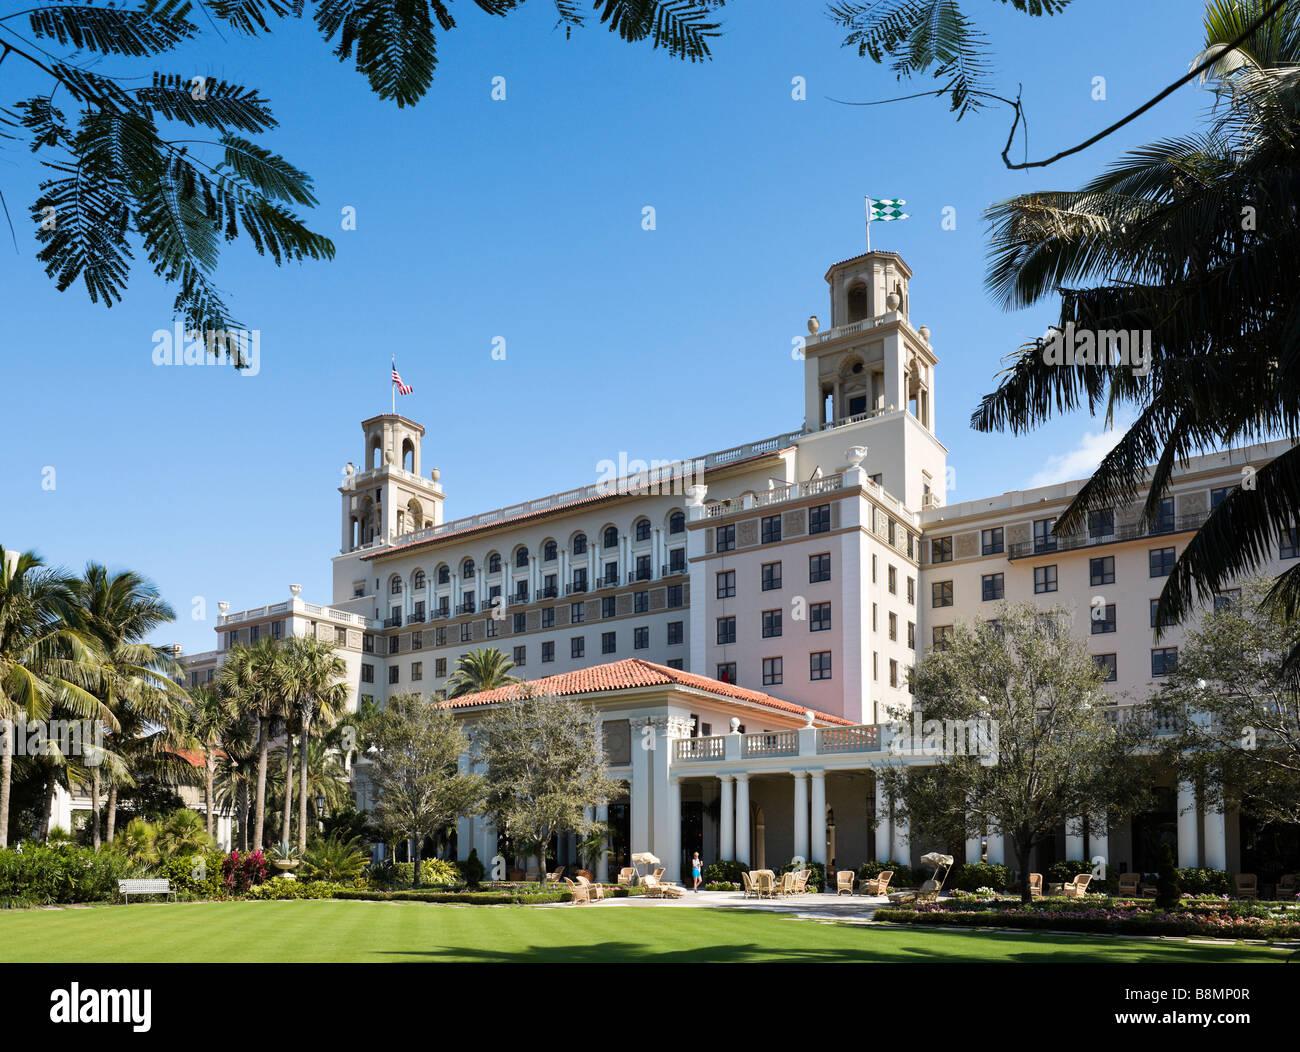 Das berühmte Breakers Hotel in Palm Beach, Gold Coast, Florida, USA Stockfoto